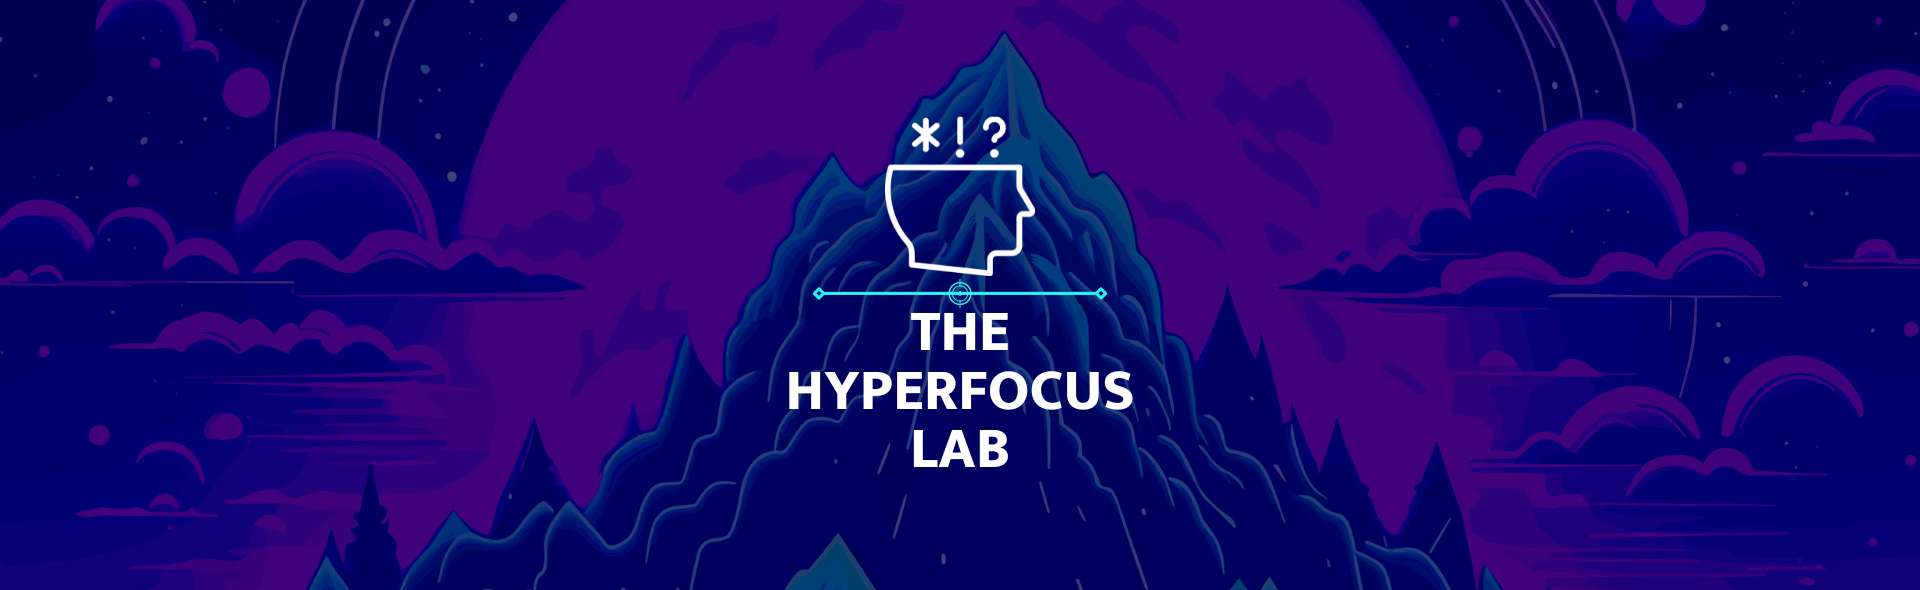 The Hyperfocus Lab